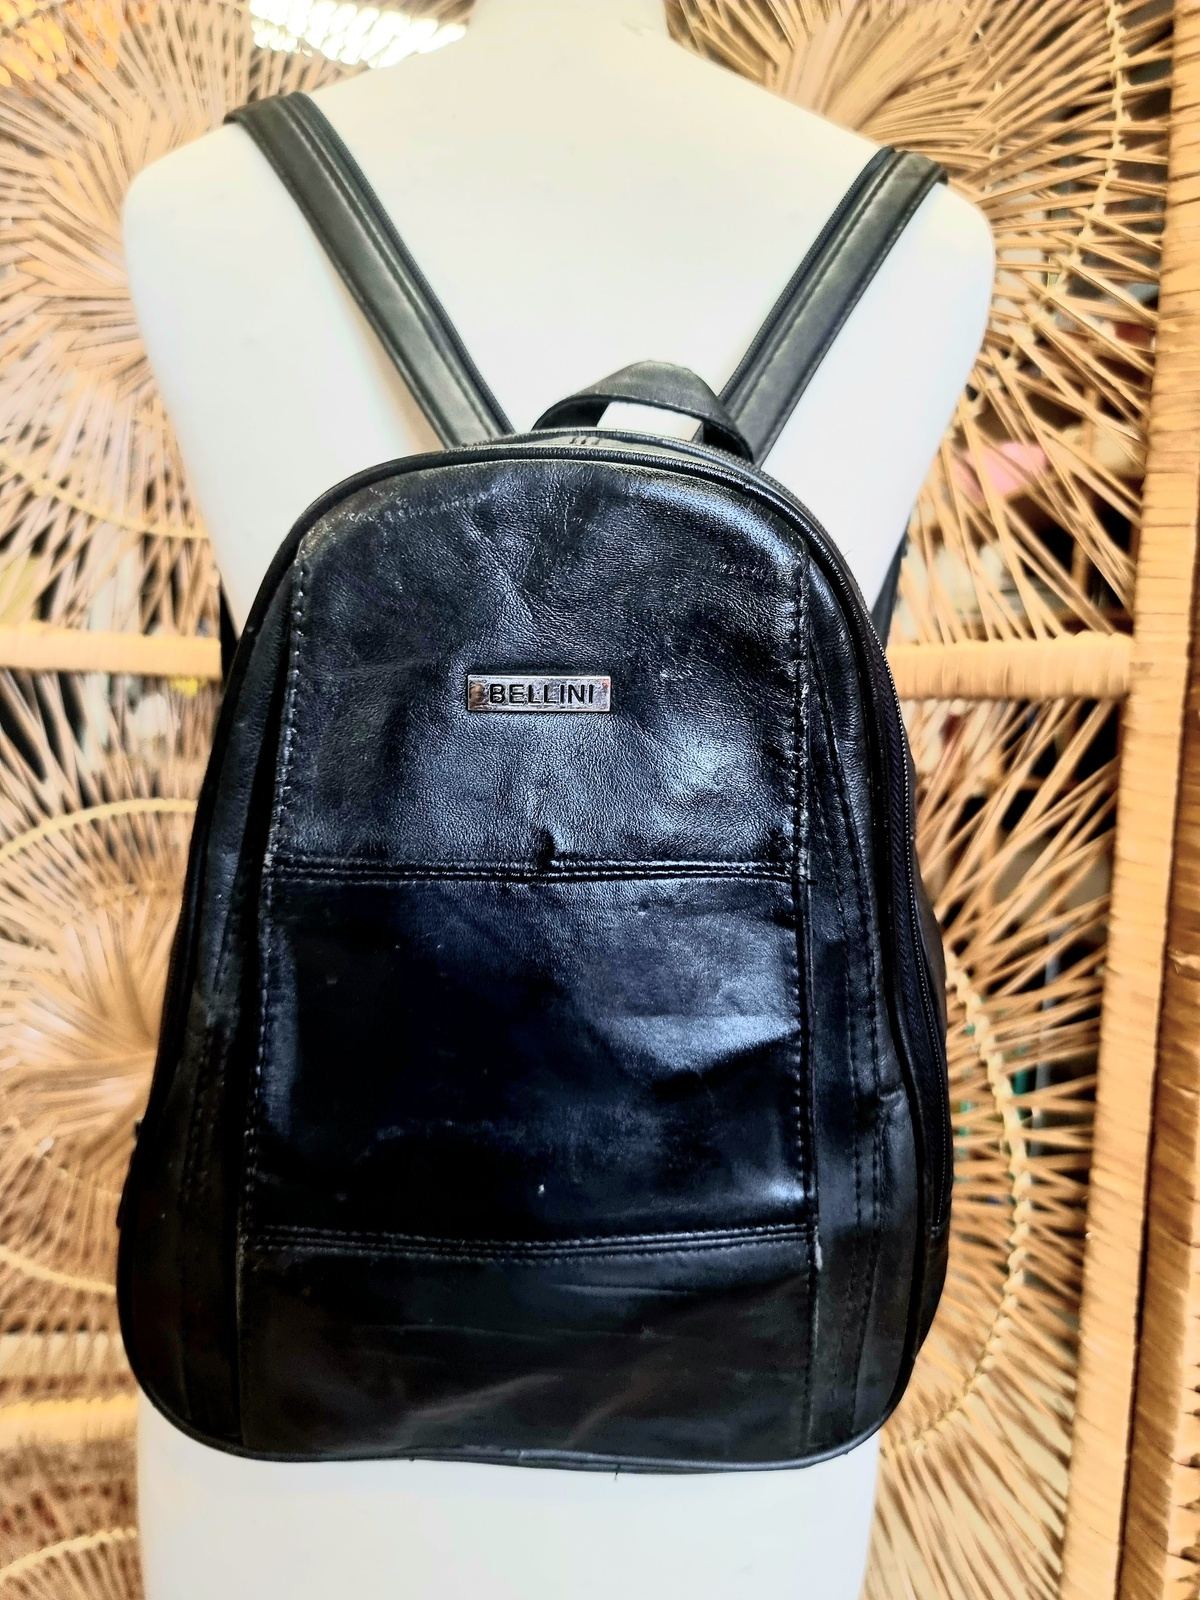 Vintage Bellini Backpack